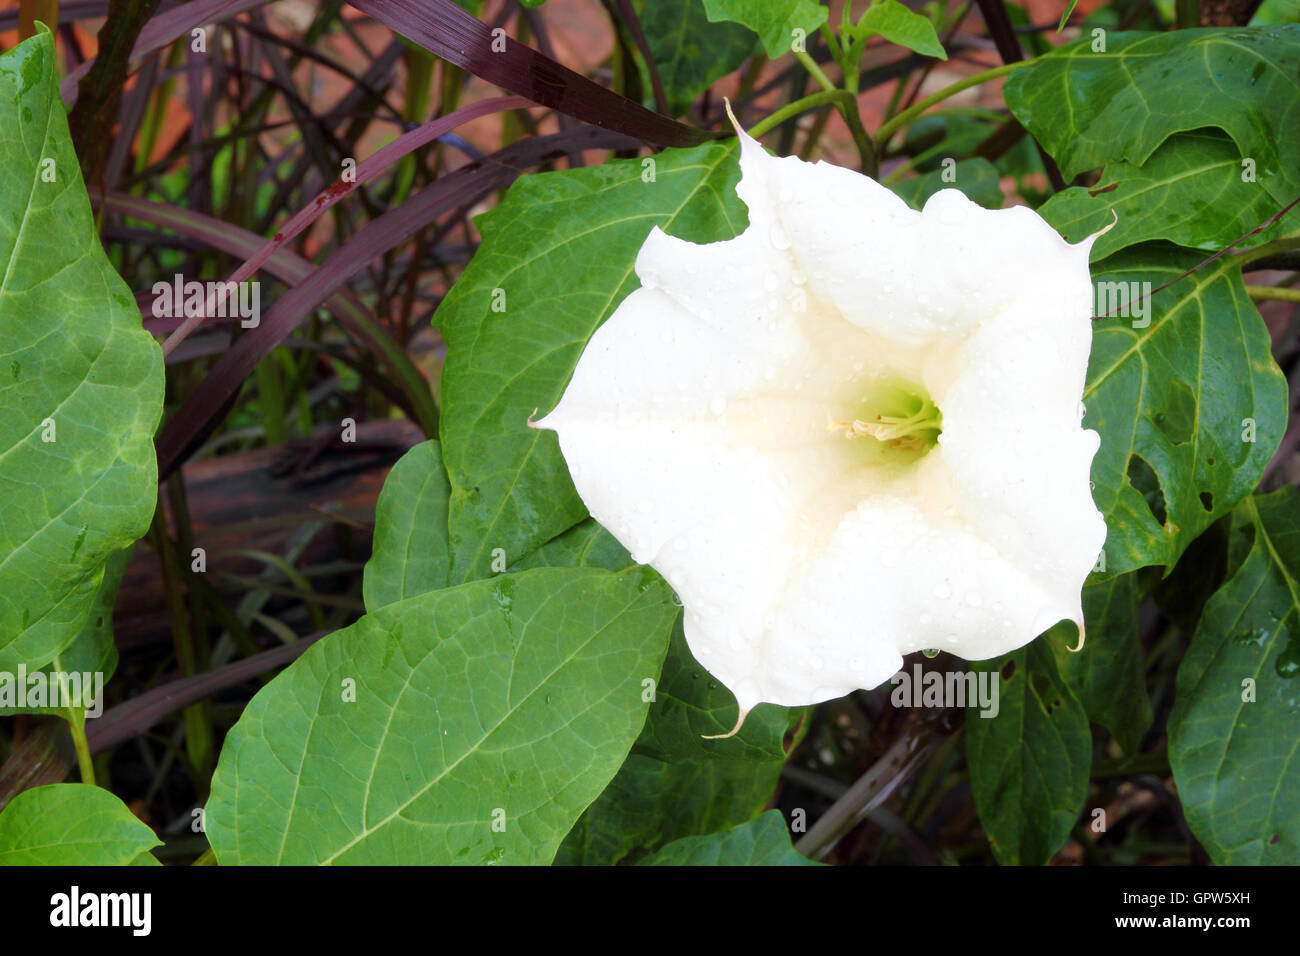 sacred datura flower Stock Photo